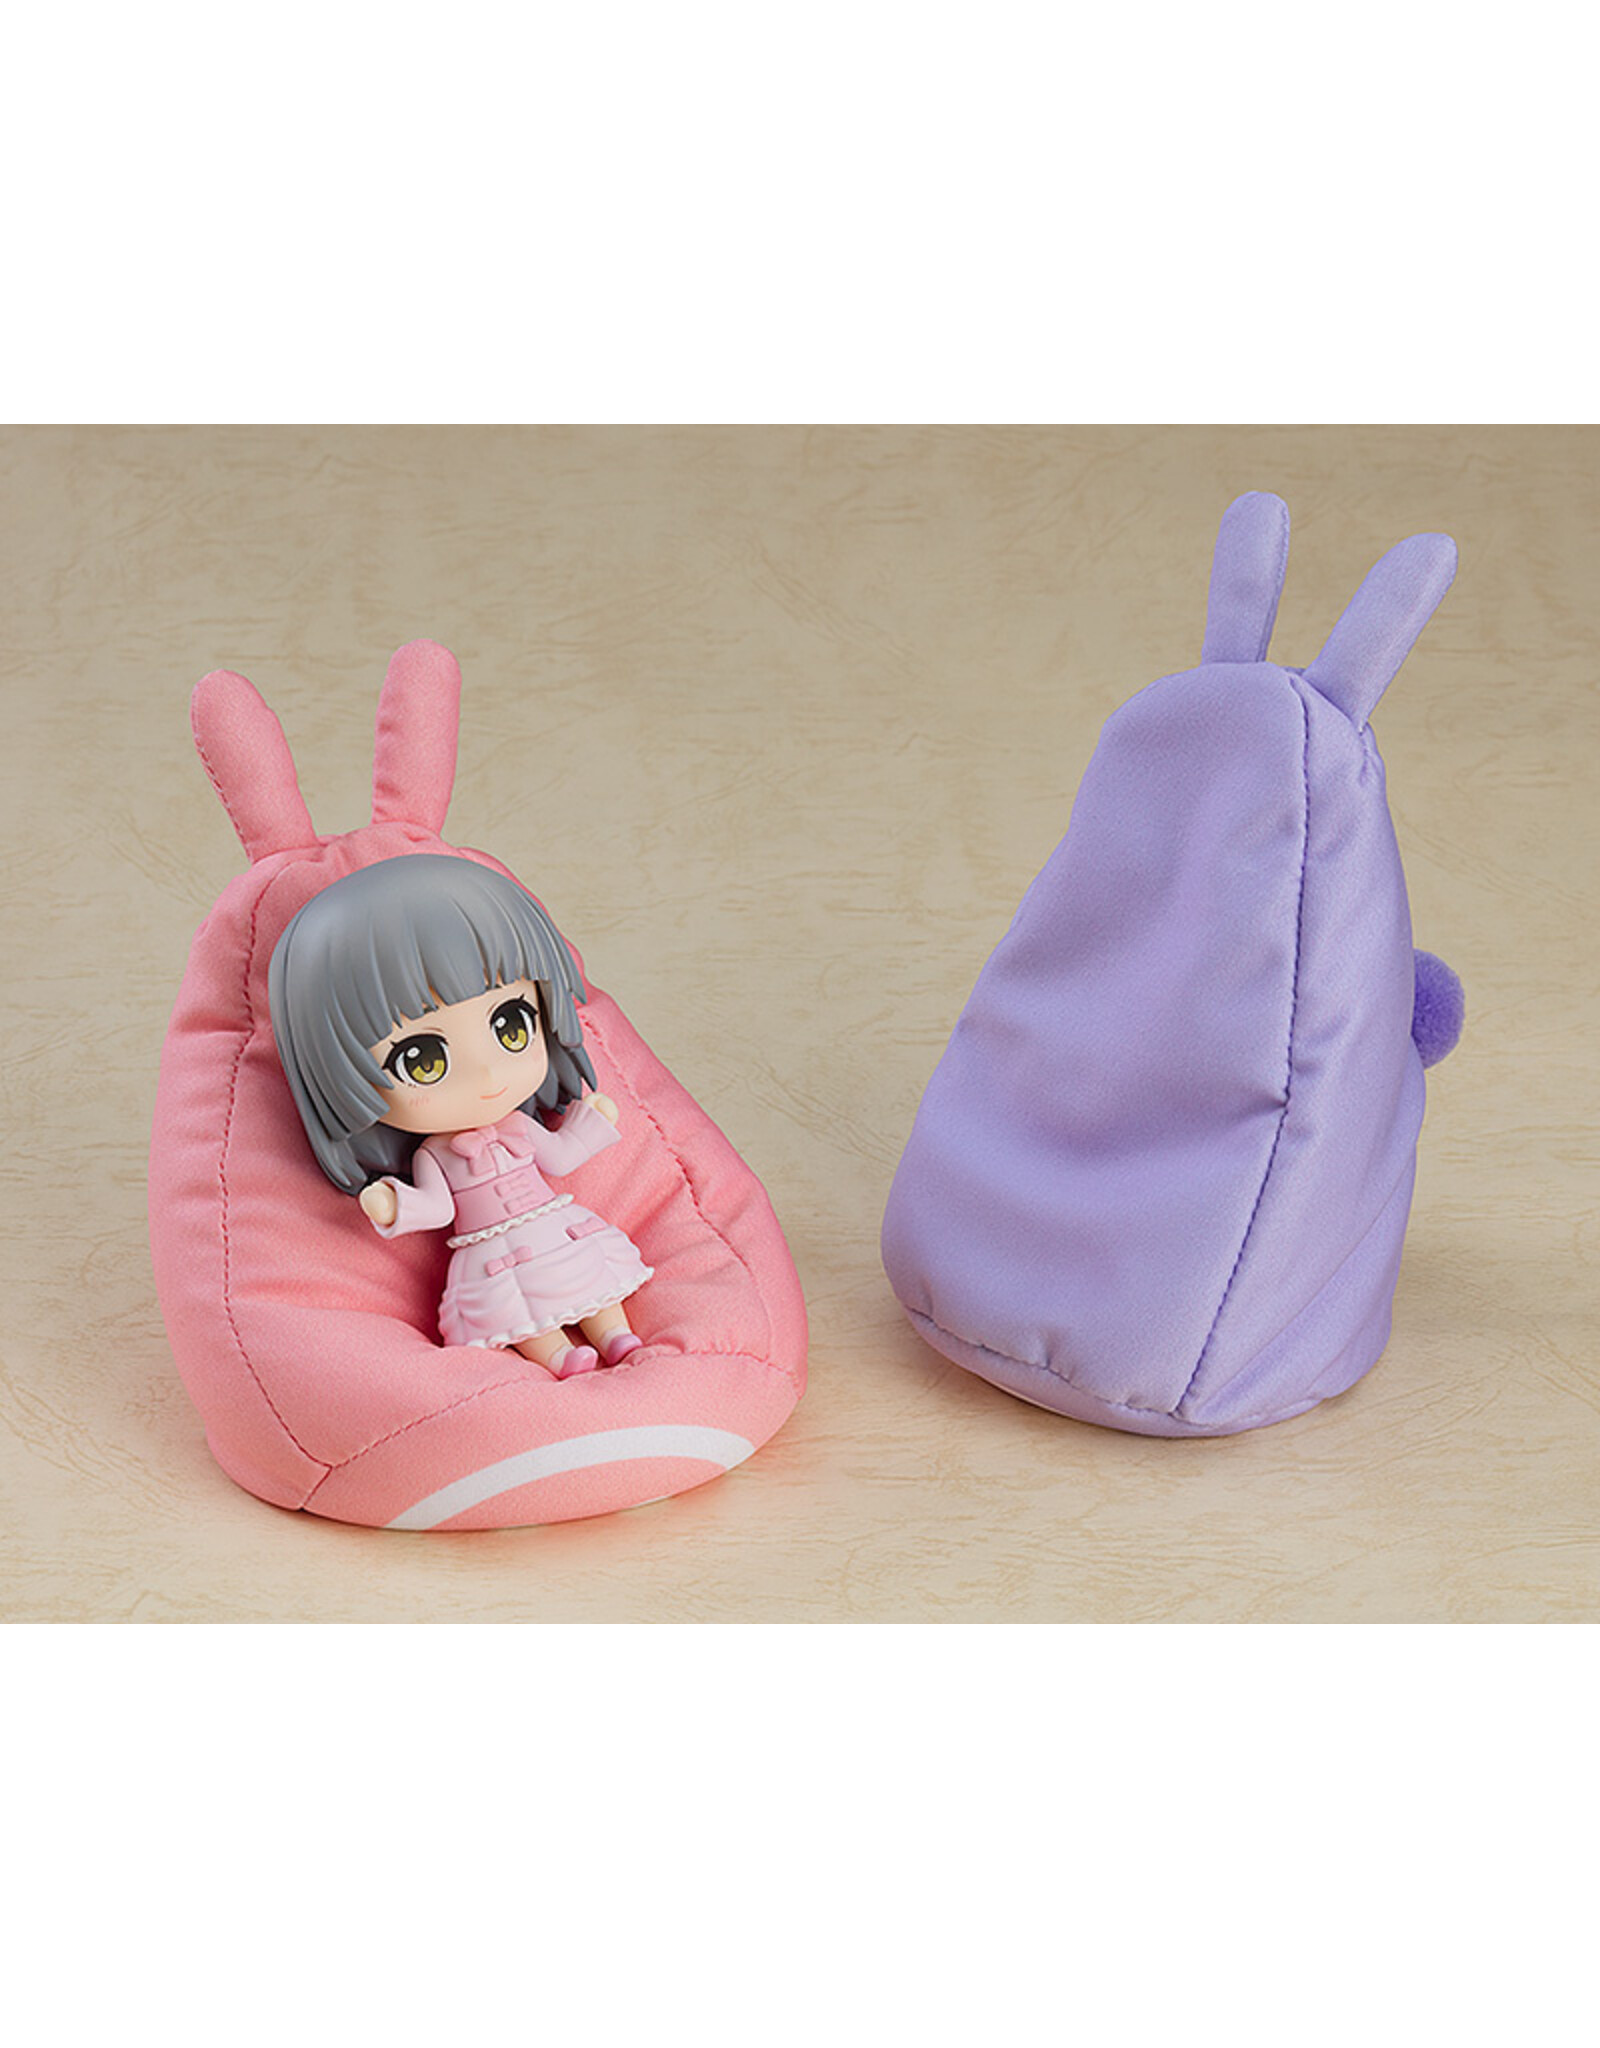 Nendoroid More Bean Bag Chair Pink Rabbit Ver.